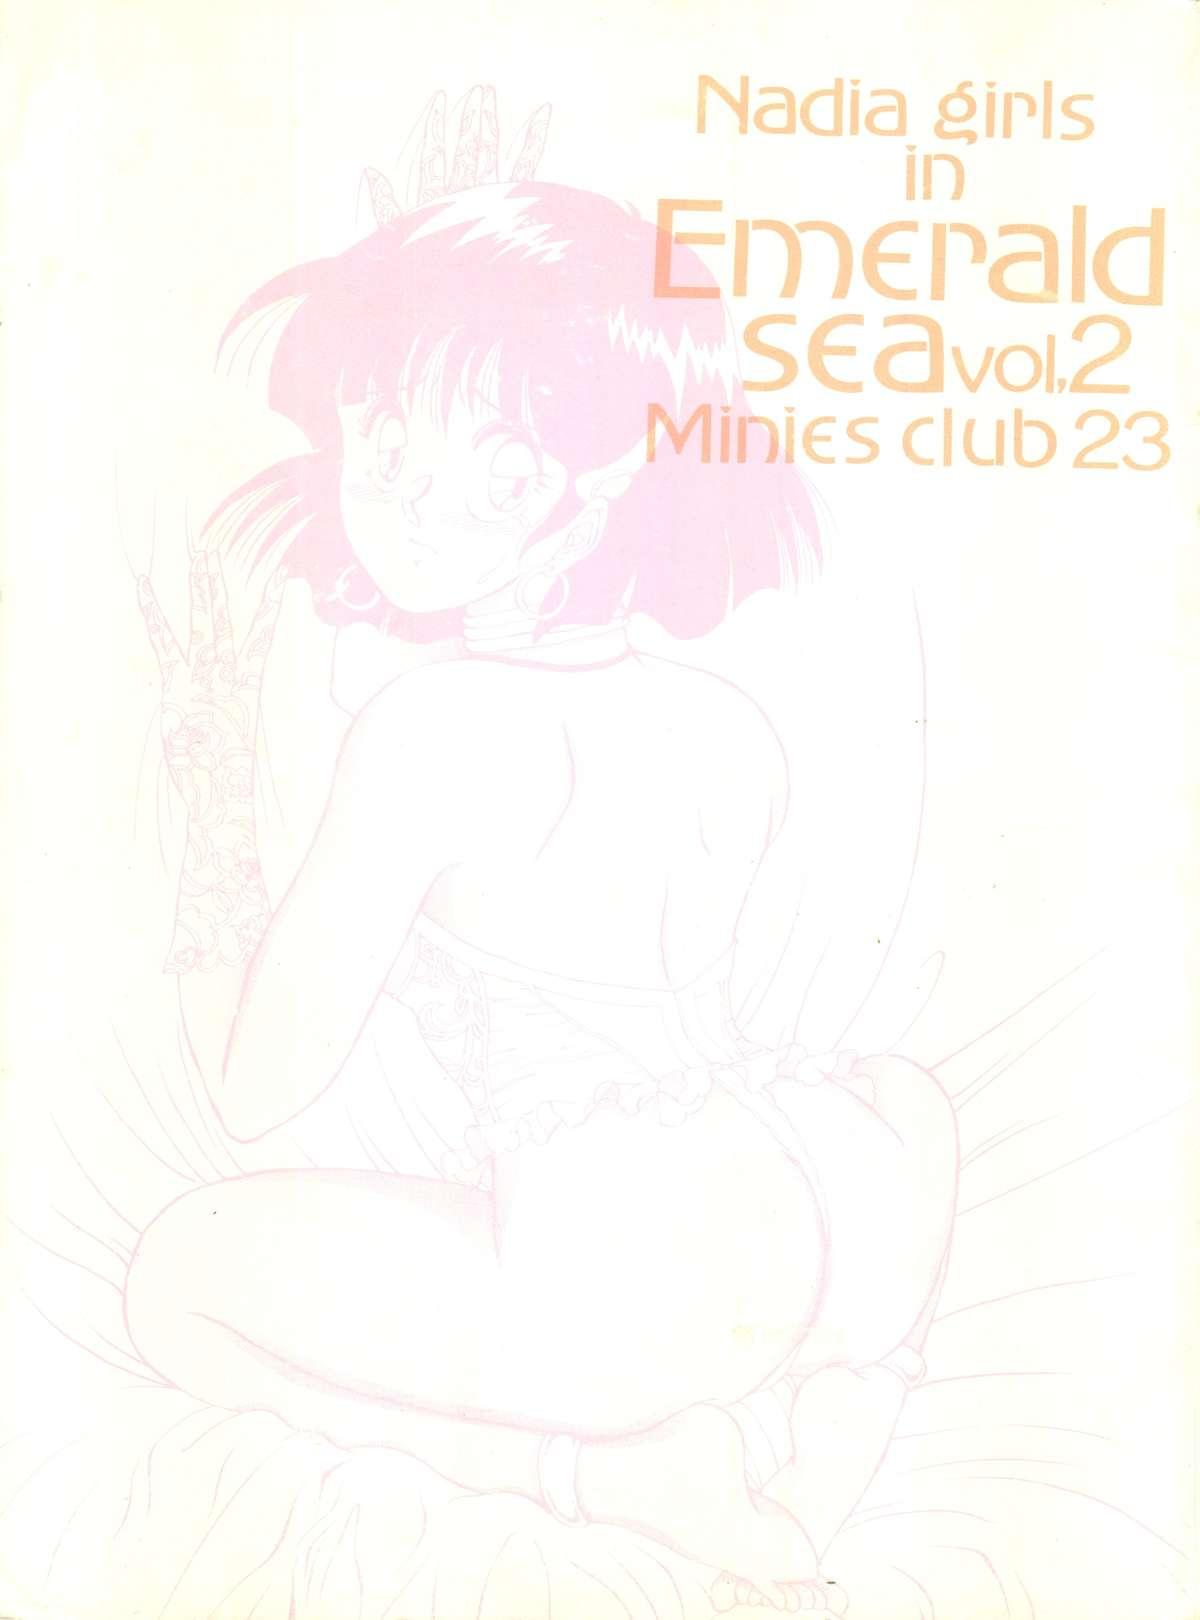 Caught Nadia Girls in Emerald Sea vol. 2 - Minies Club 23 - Fushigi no umi no nadia Asiansex - Page 1